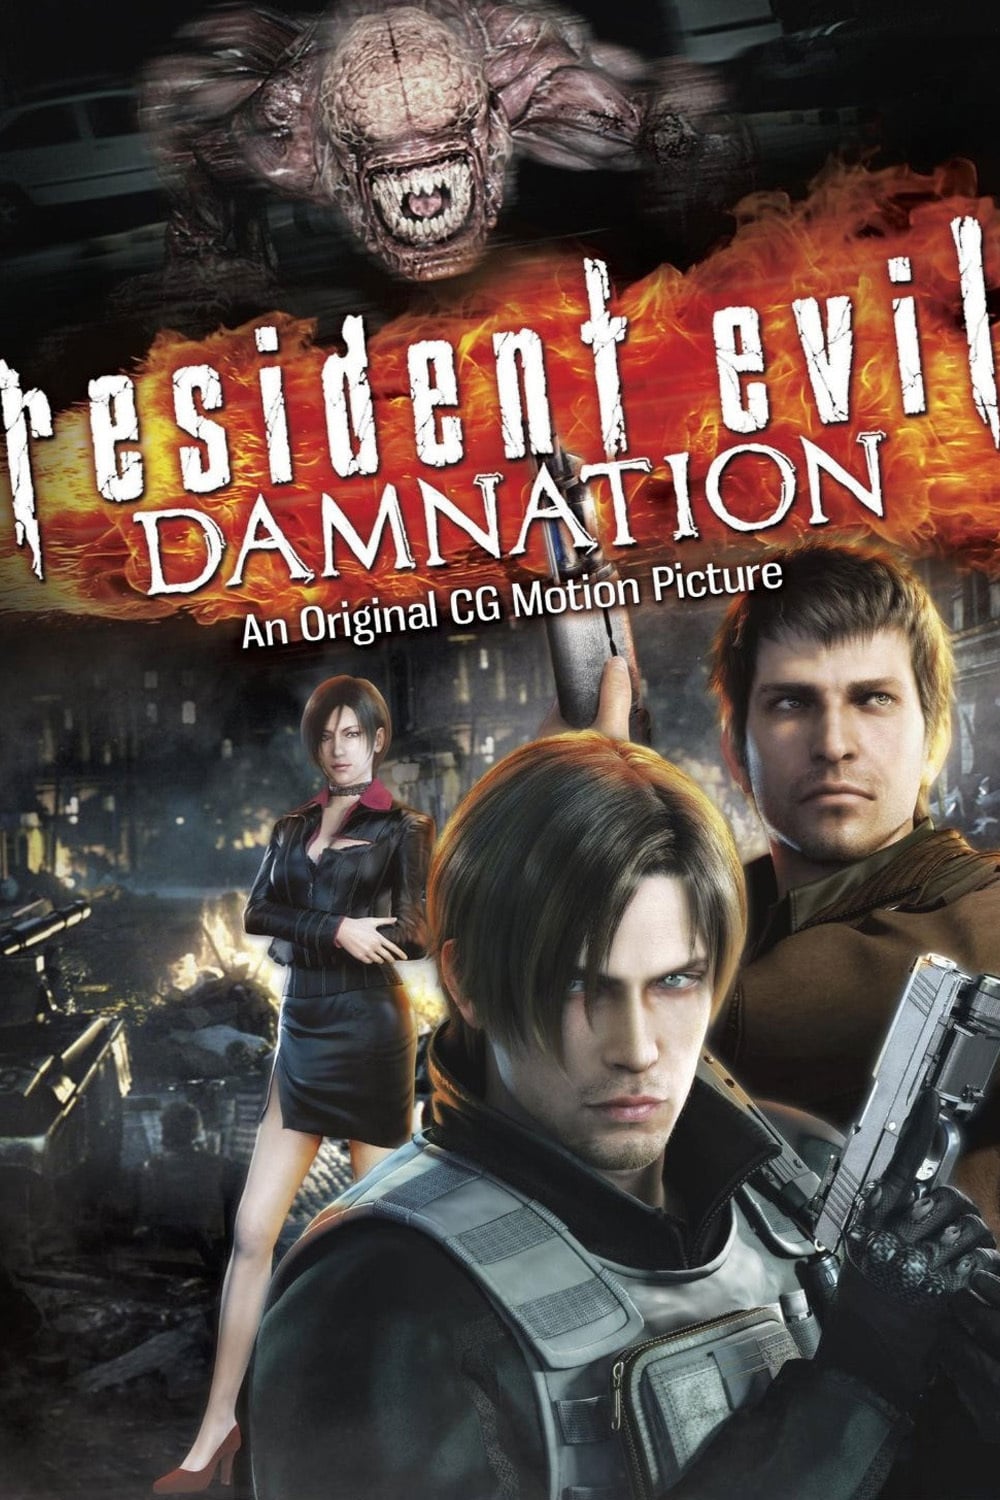 Plakat von "Resident Evil - Damnation"